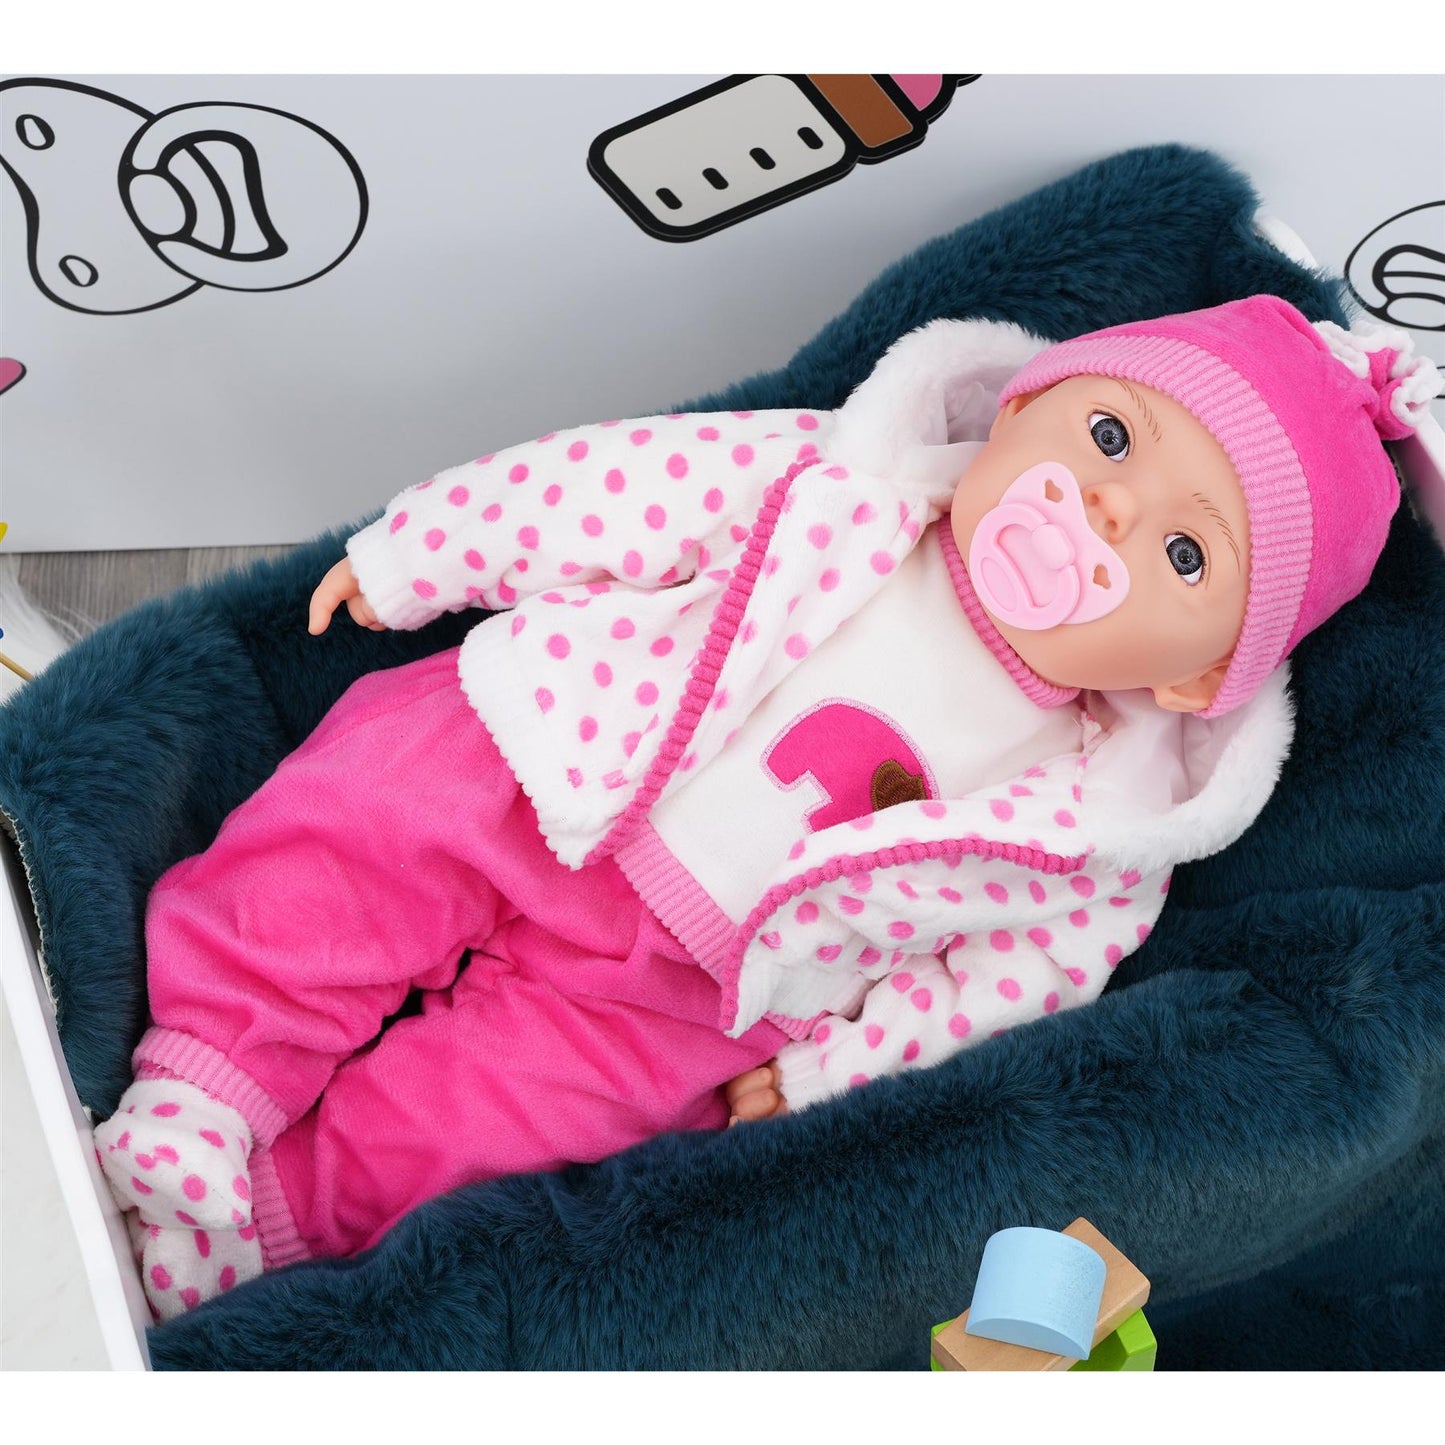 Spotty Coat Bibi Baby Doll Toy With Dummy & Sounds by BiBi Doll - UKBuyZone